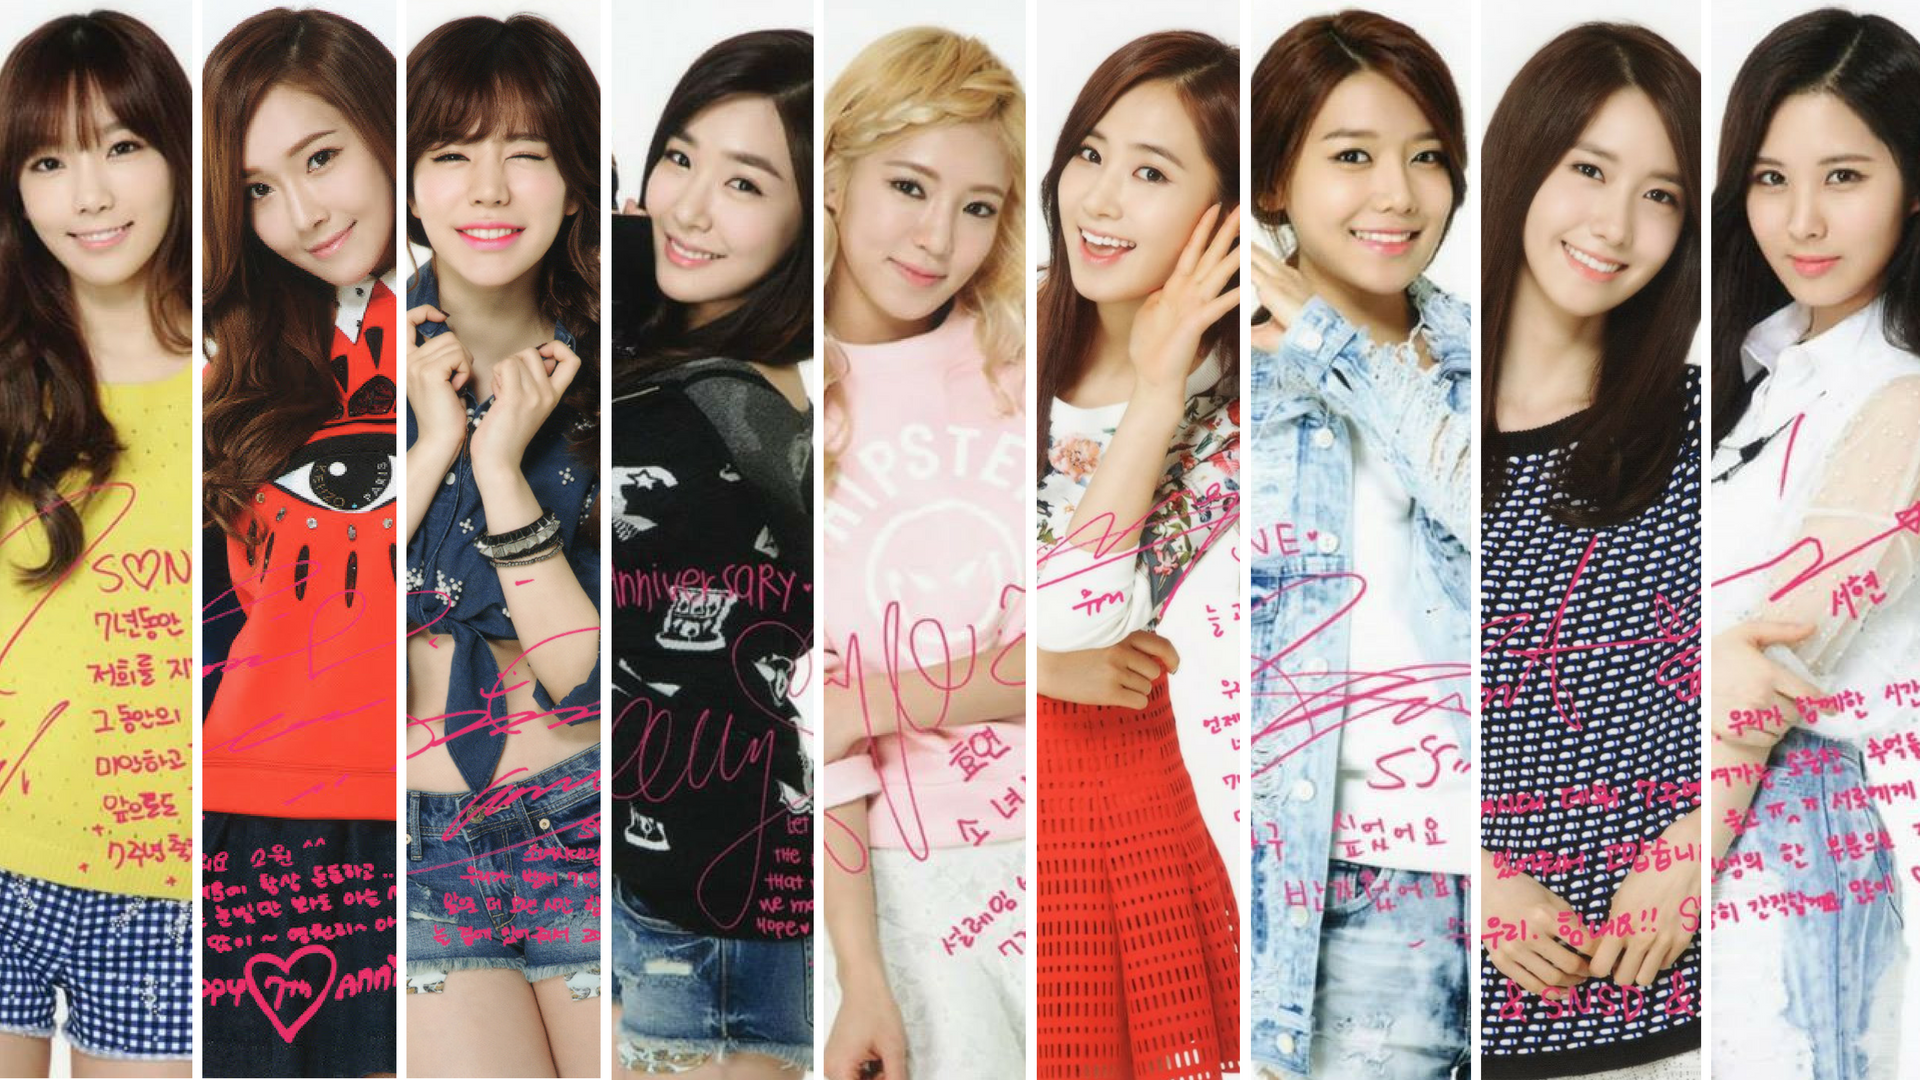 snsd members - Girls Generation/SNSD Photo (39870987) - Fanpop